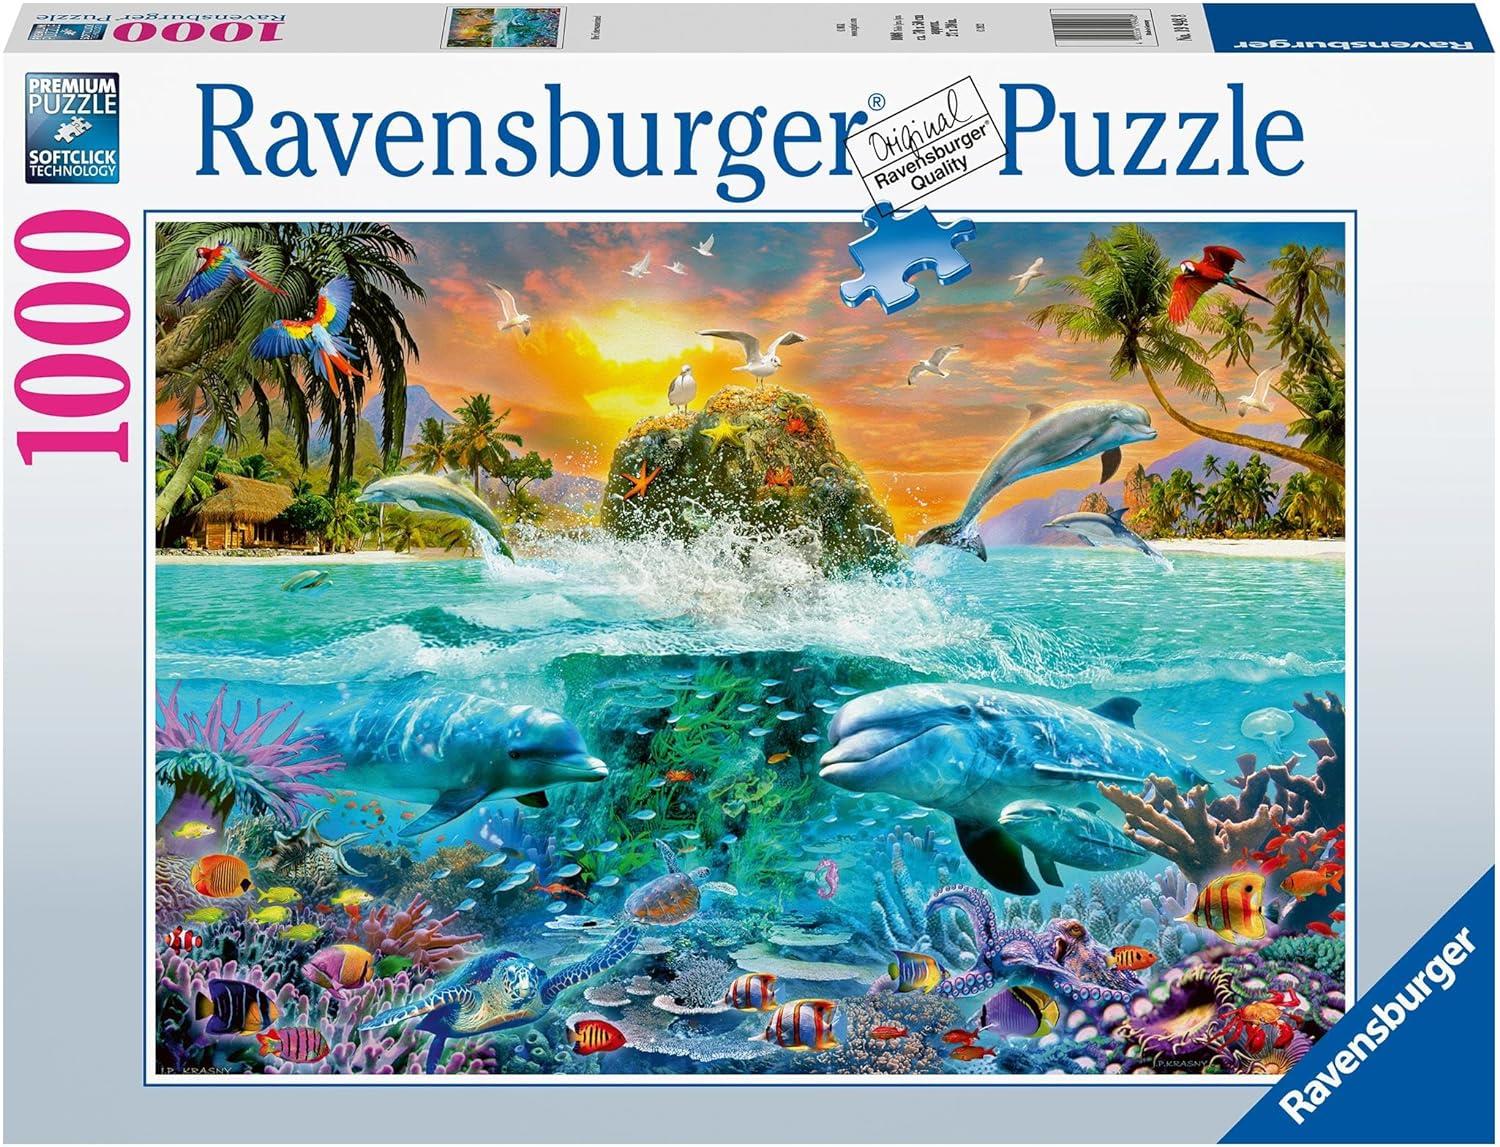 Ravensburger Underwater Island Jigsaw Puzzle (1000 Pieces)